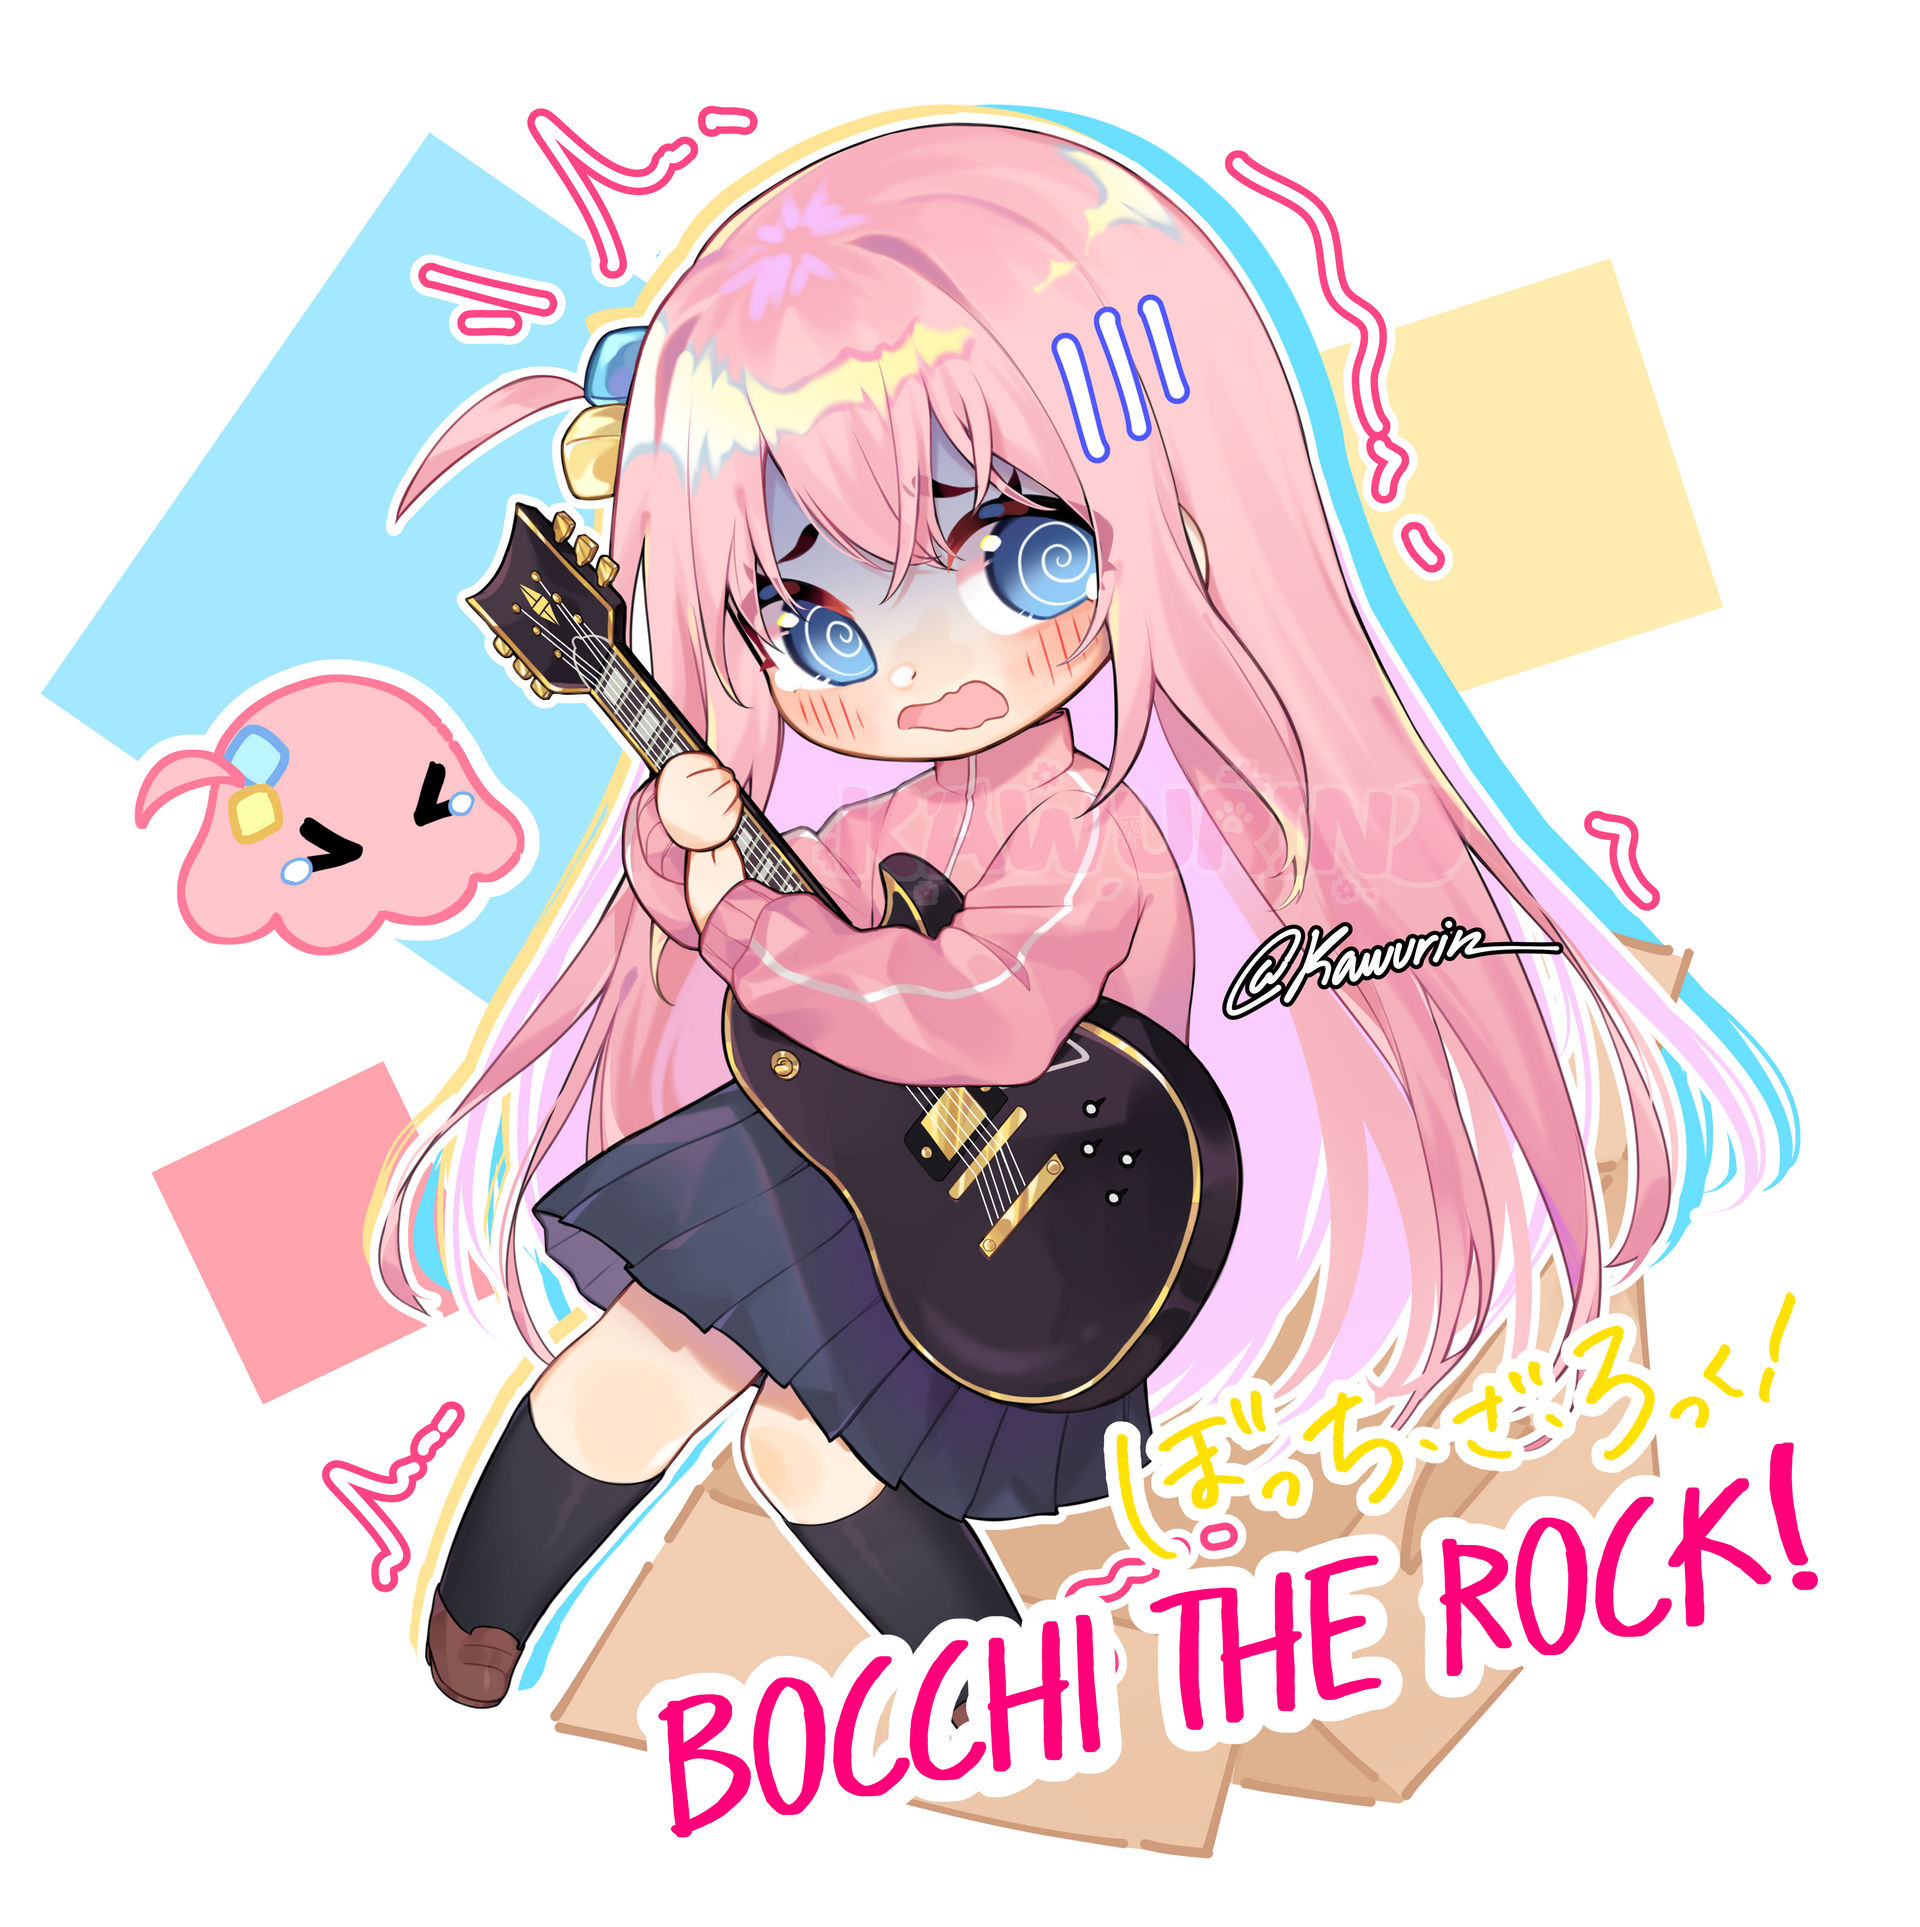 Bocchi The Rock!: Video Gallery